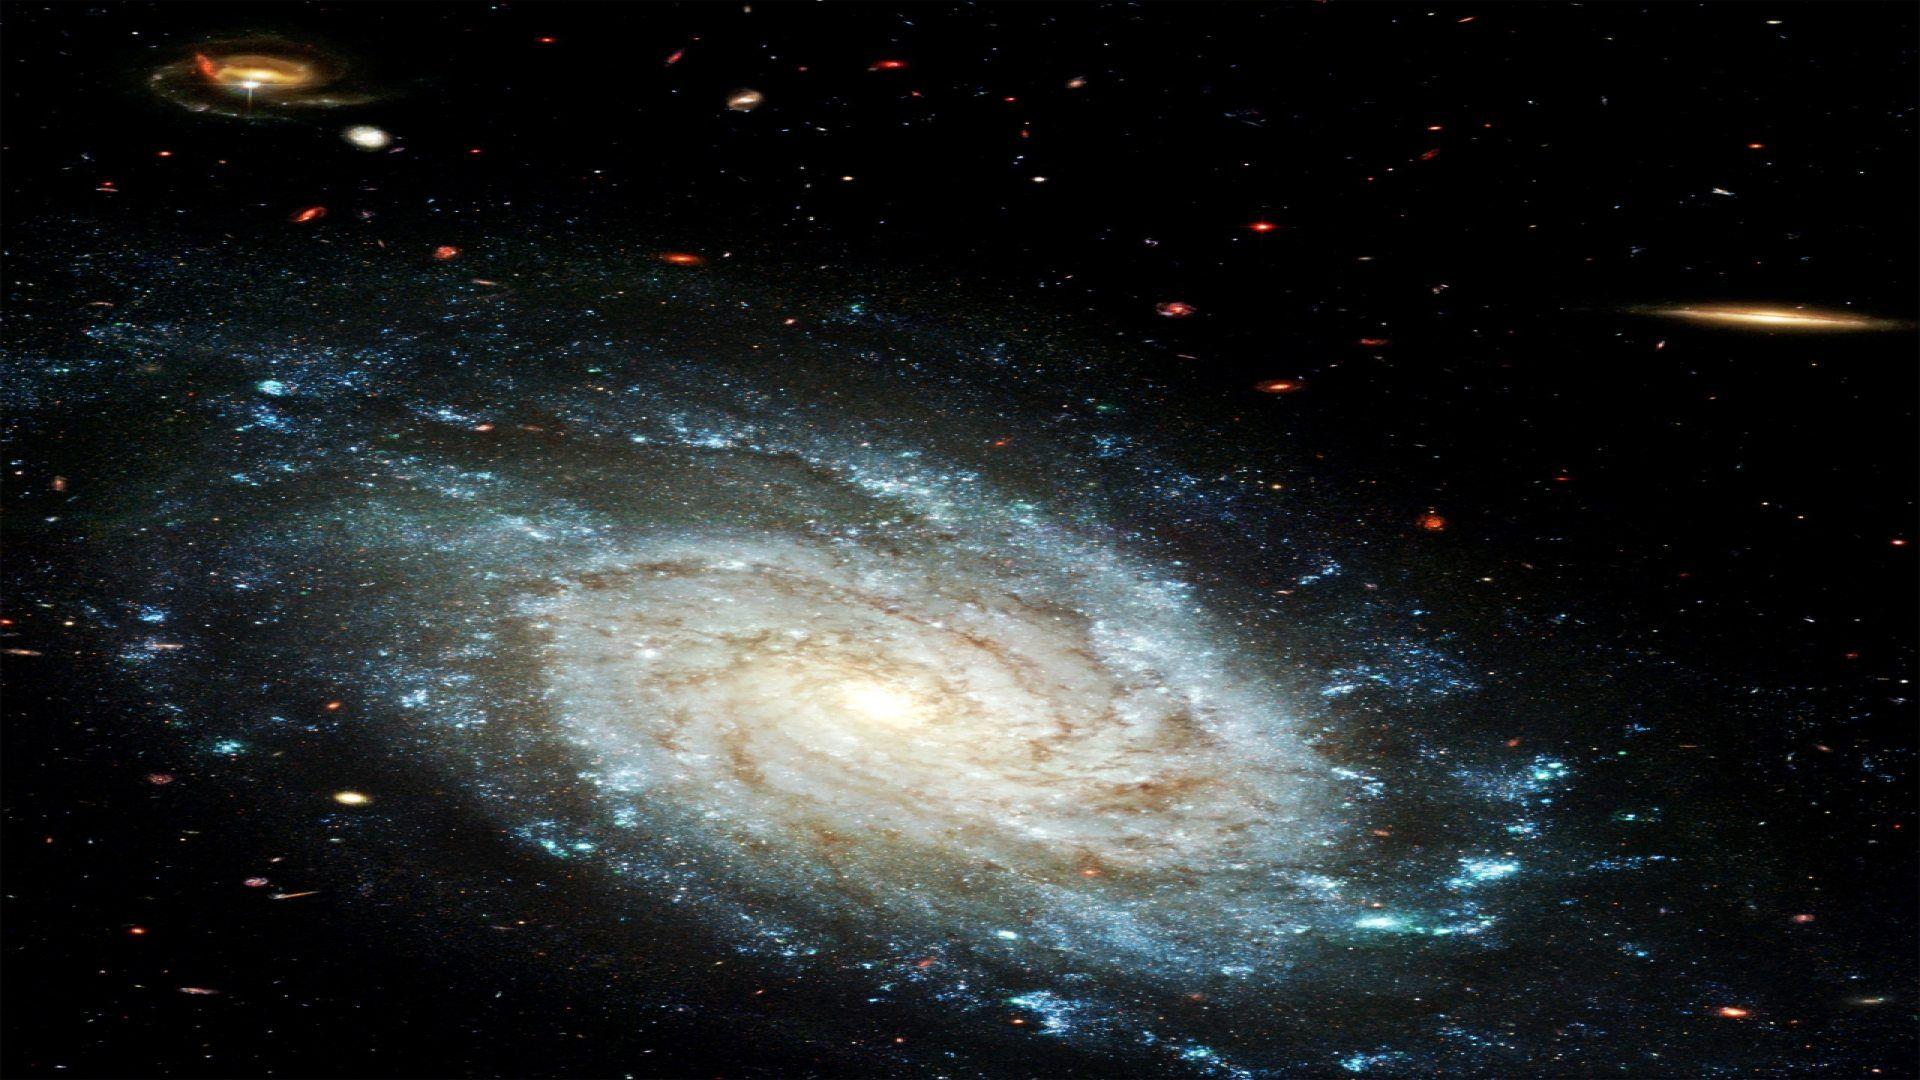 Milky Way 4k Hubble Wallpapers Top Free Milky Way 4k Hubble Images